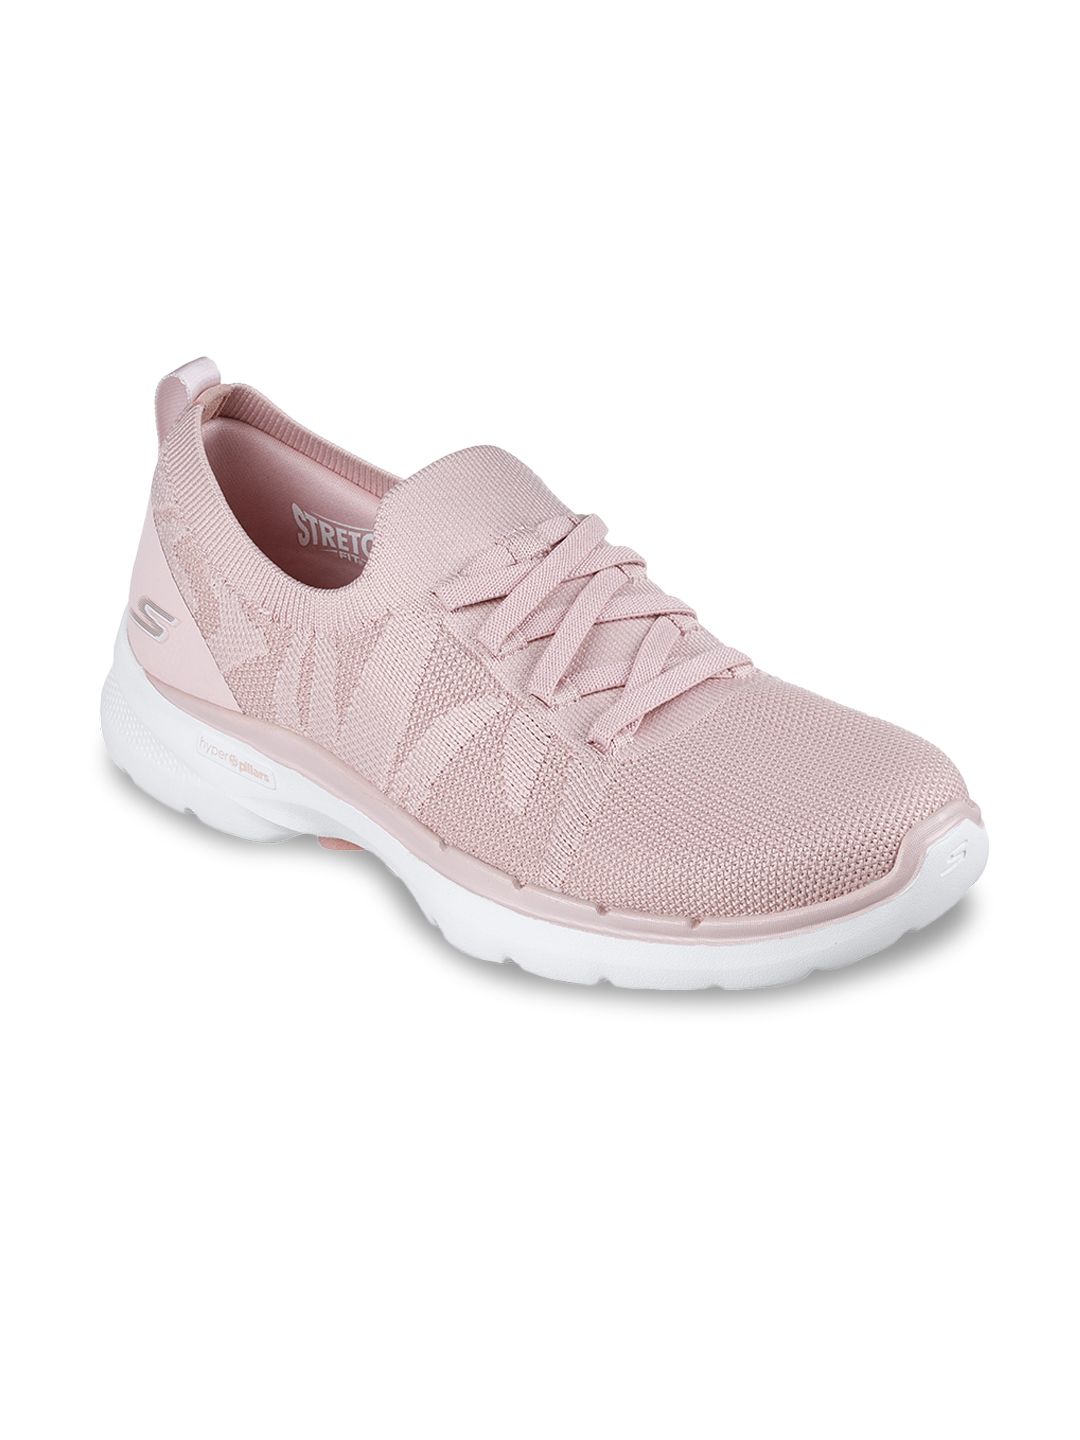 Skechers Women Pink Mesh Walking Non-Marking Shoes Price in India